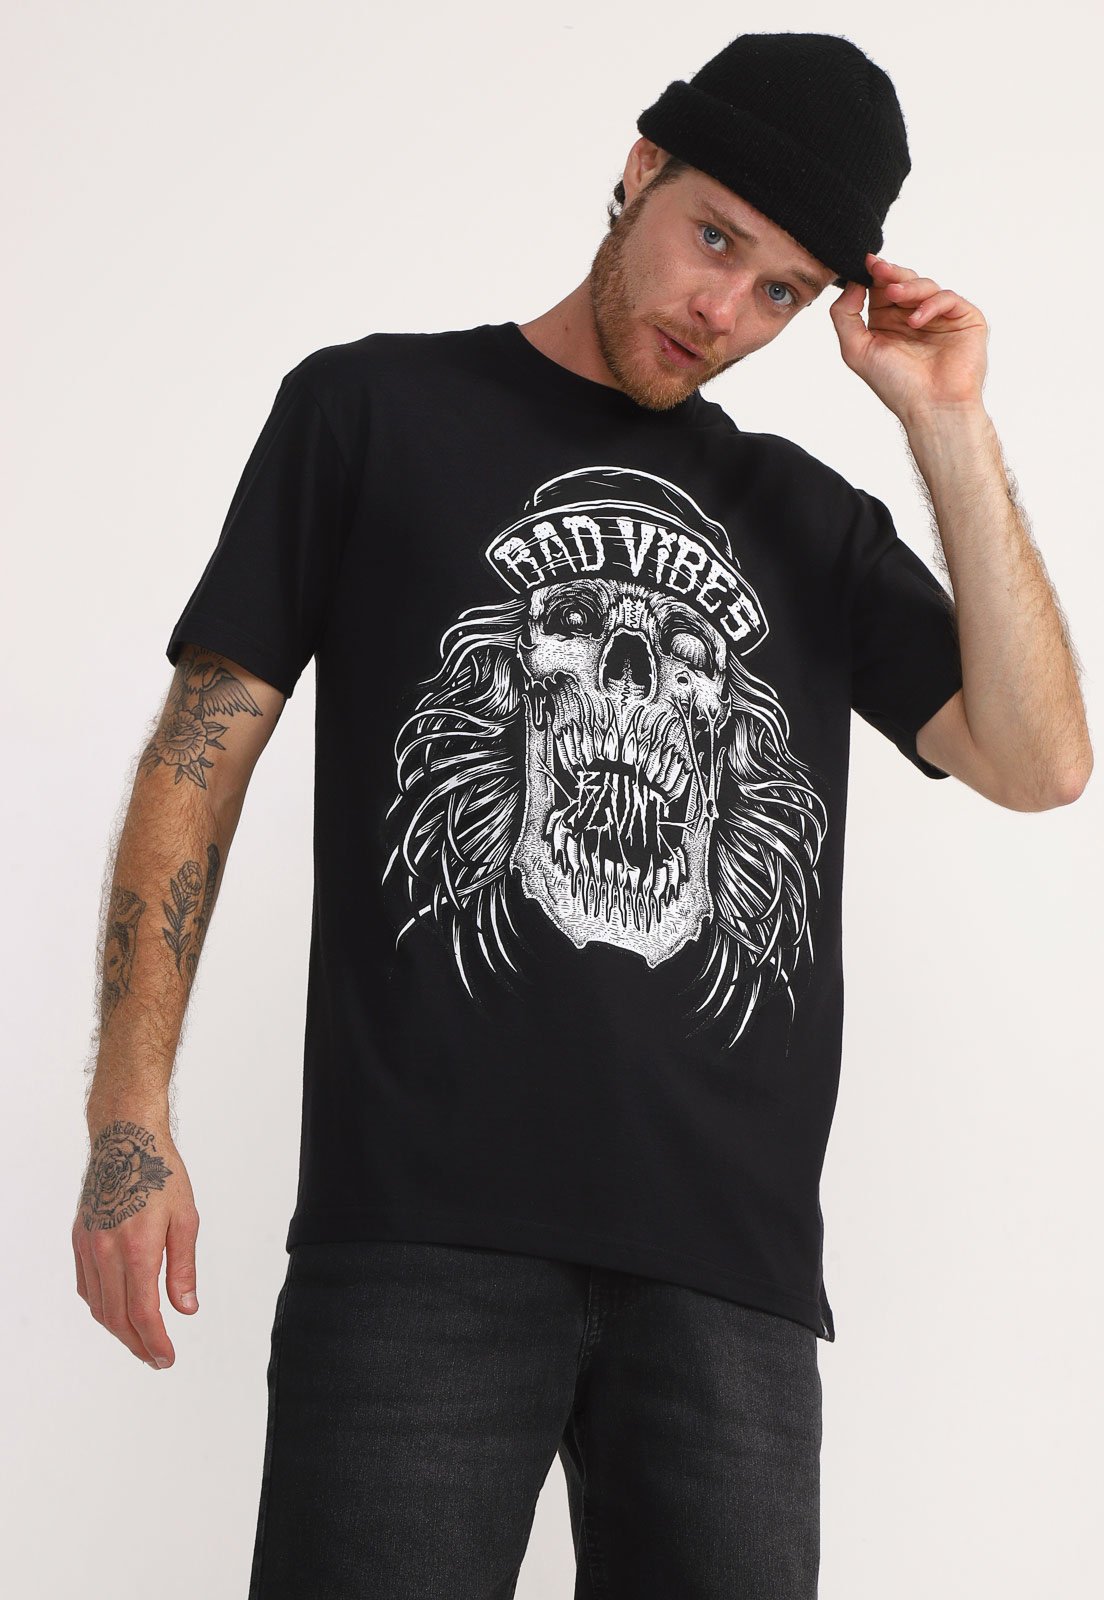 https://static.dafiti.com.br/p/Blunt-Camiseta-Blunt-Skull-Bad-Vibes-Preta-2066-6004733-1-zoom.jpg